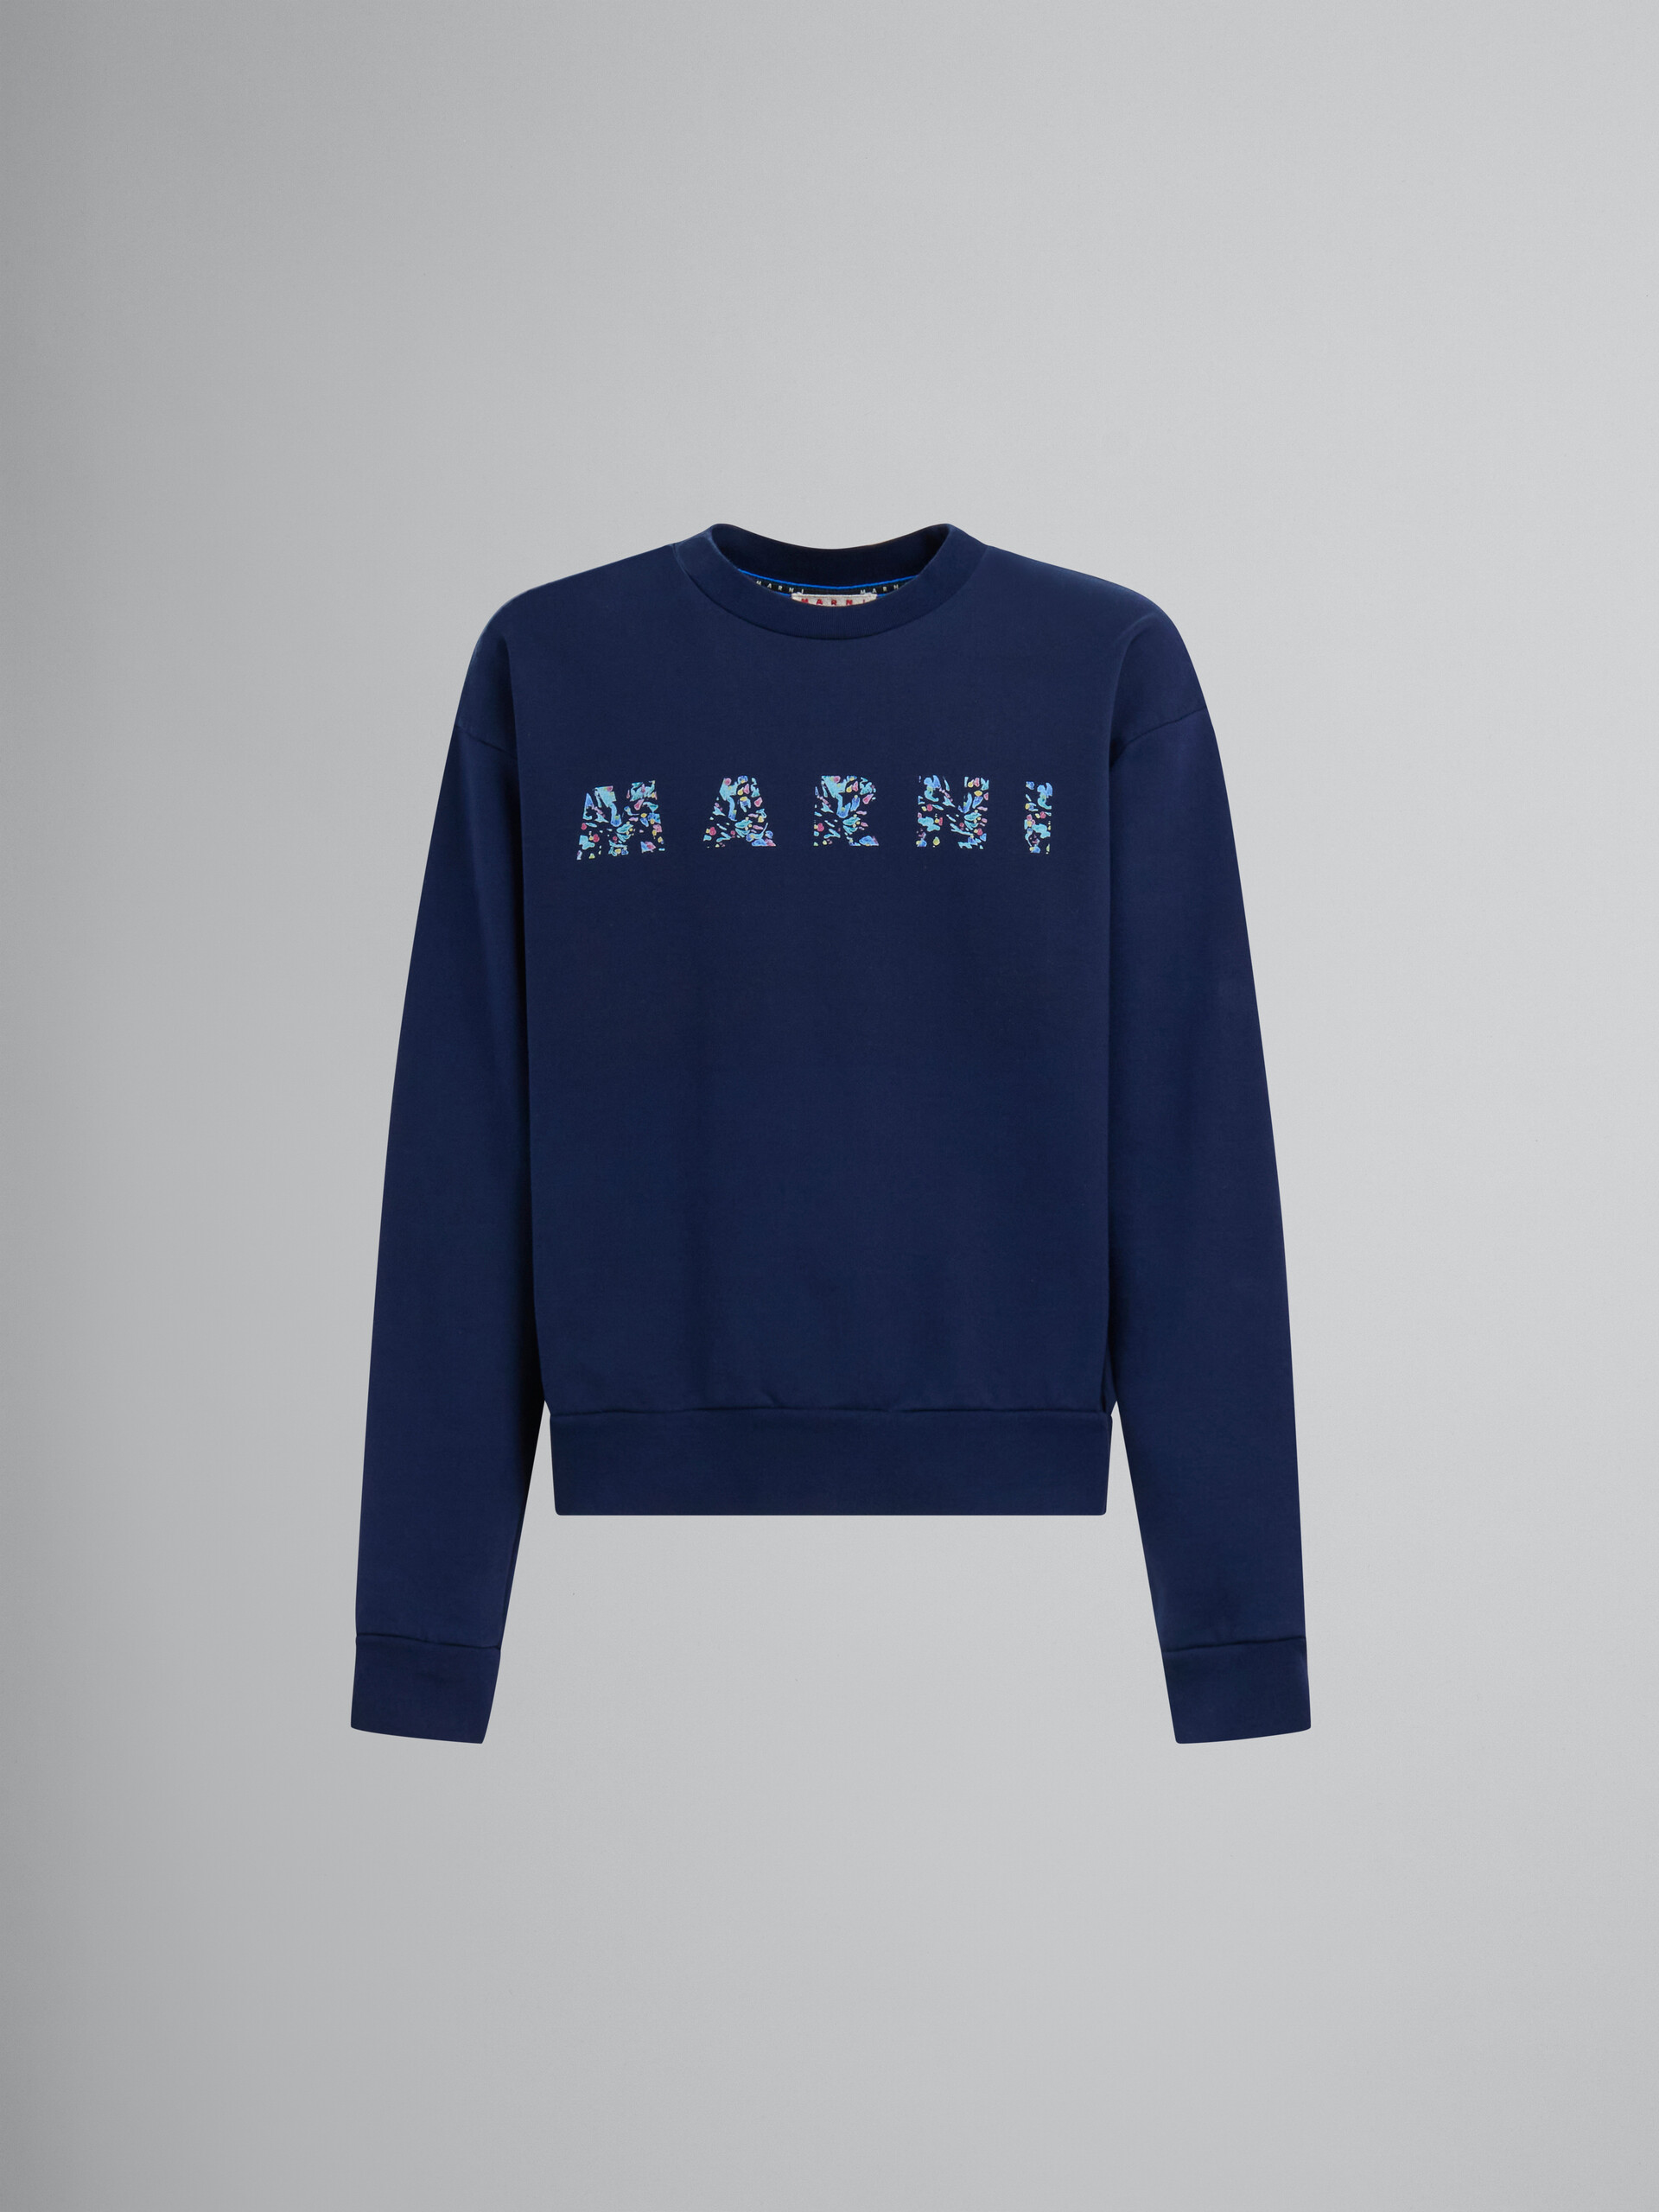 Blue organic cotton sweatshirt with patterned Marni print - Sweaters - Image 1